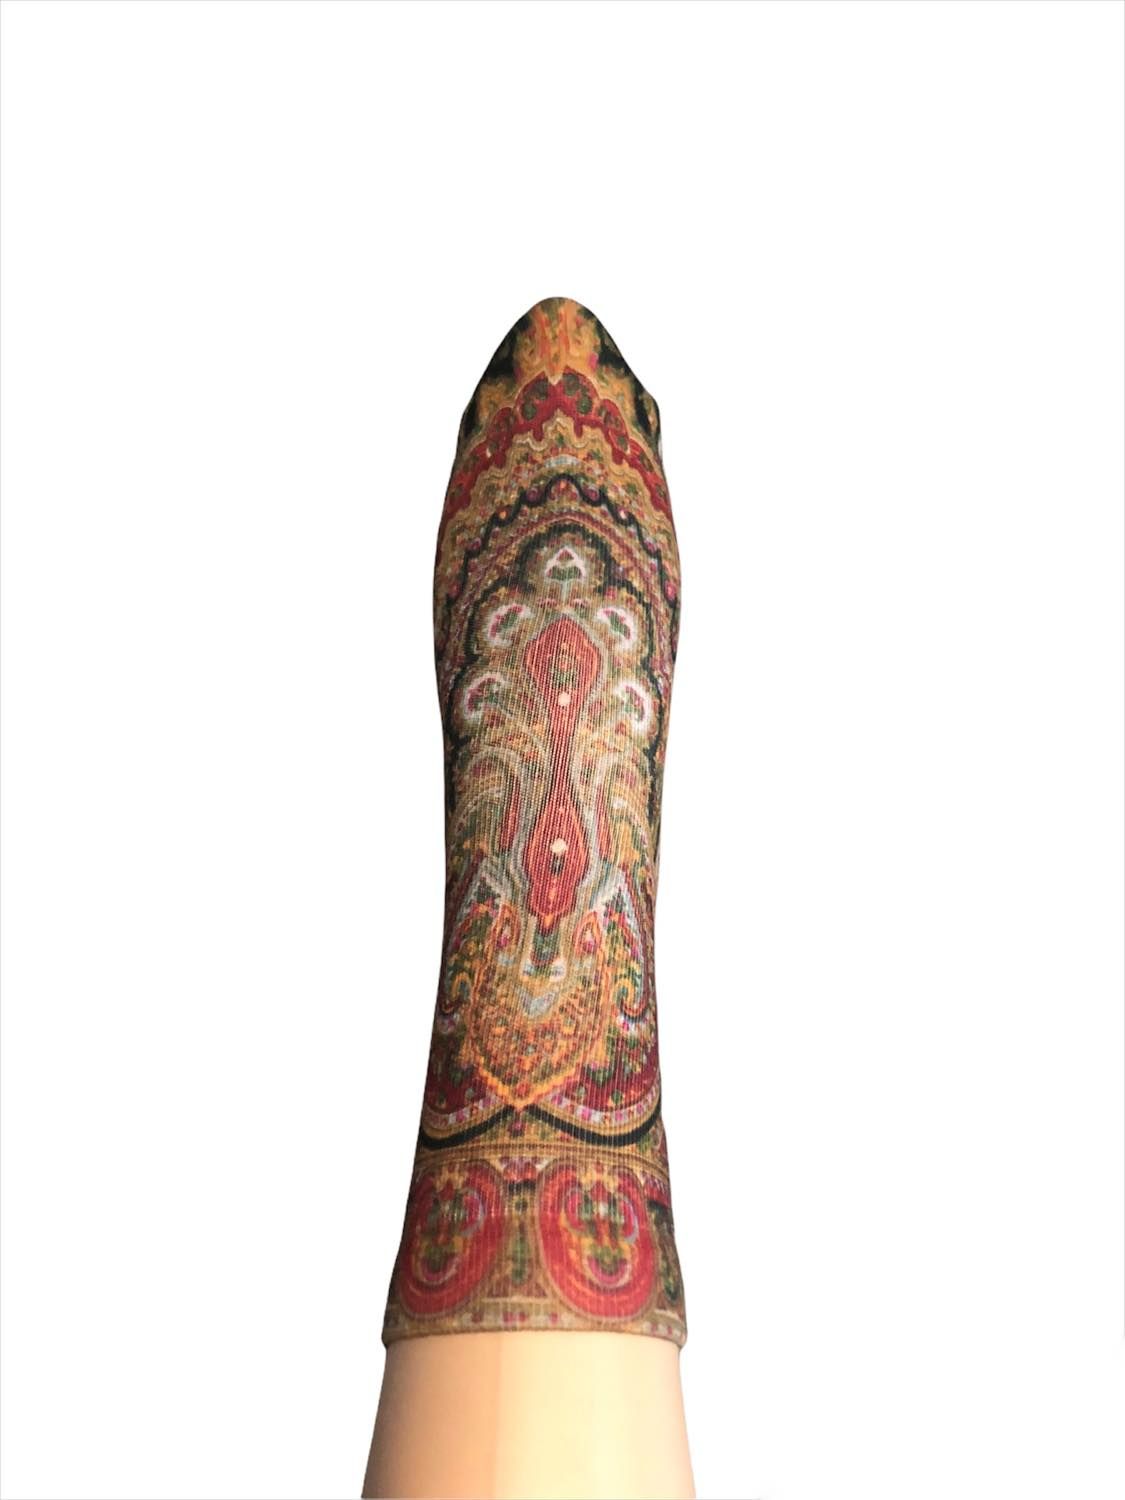 https://www.tradicionpopular.com/wp content/uploads/2023/04/alt sancha tradicion popular badajoz calcetines de 100 colores trajes regionales folklore indumentaria modafolk 3 1.jpg